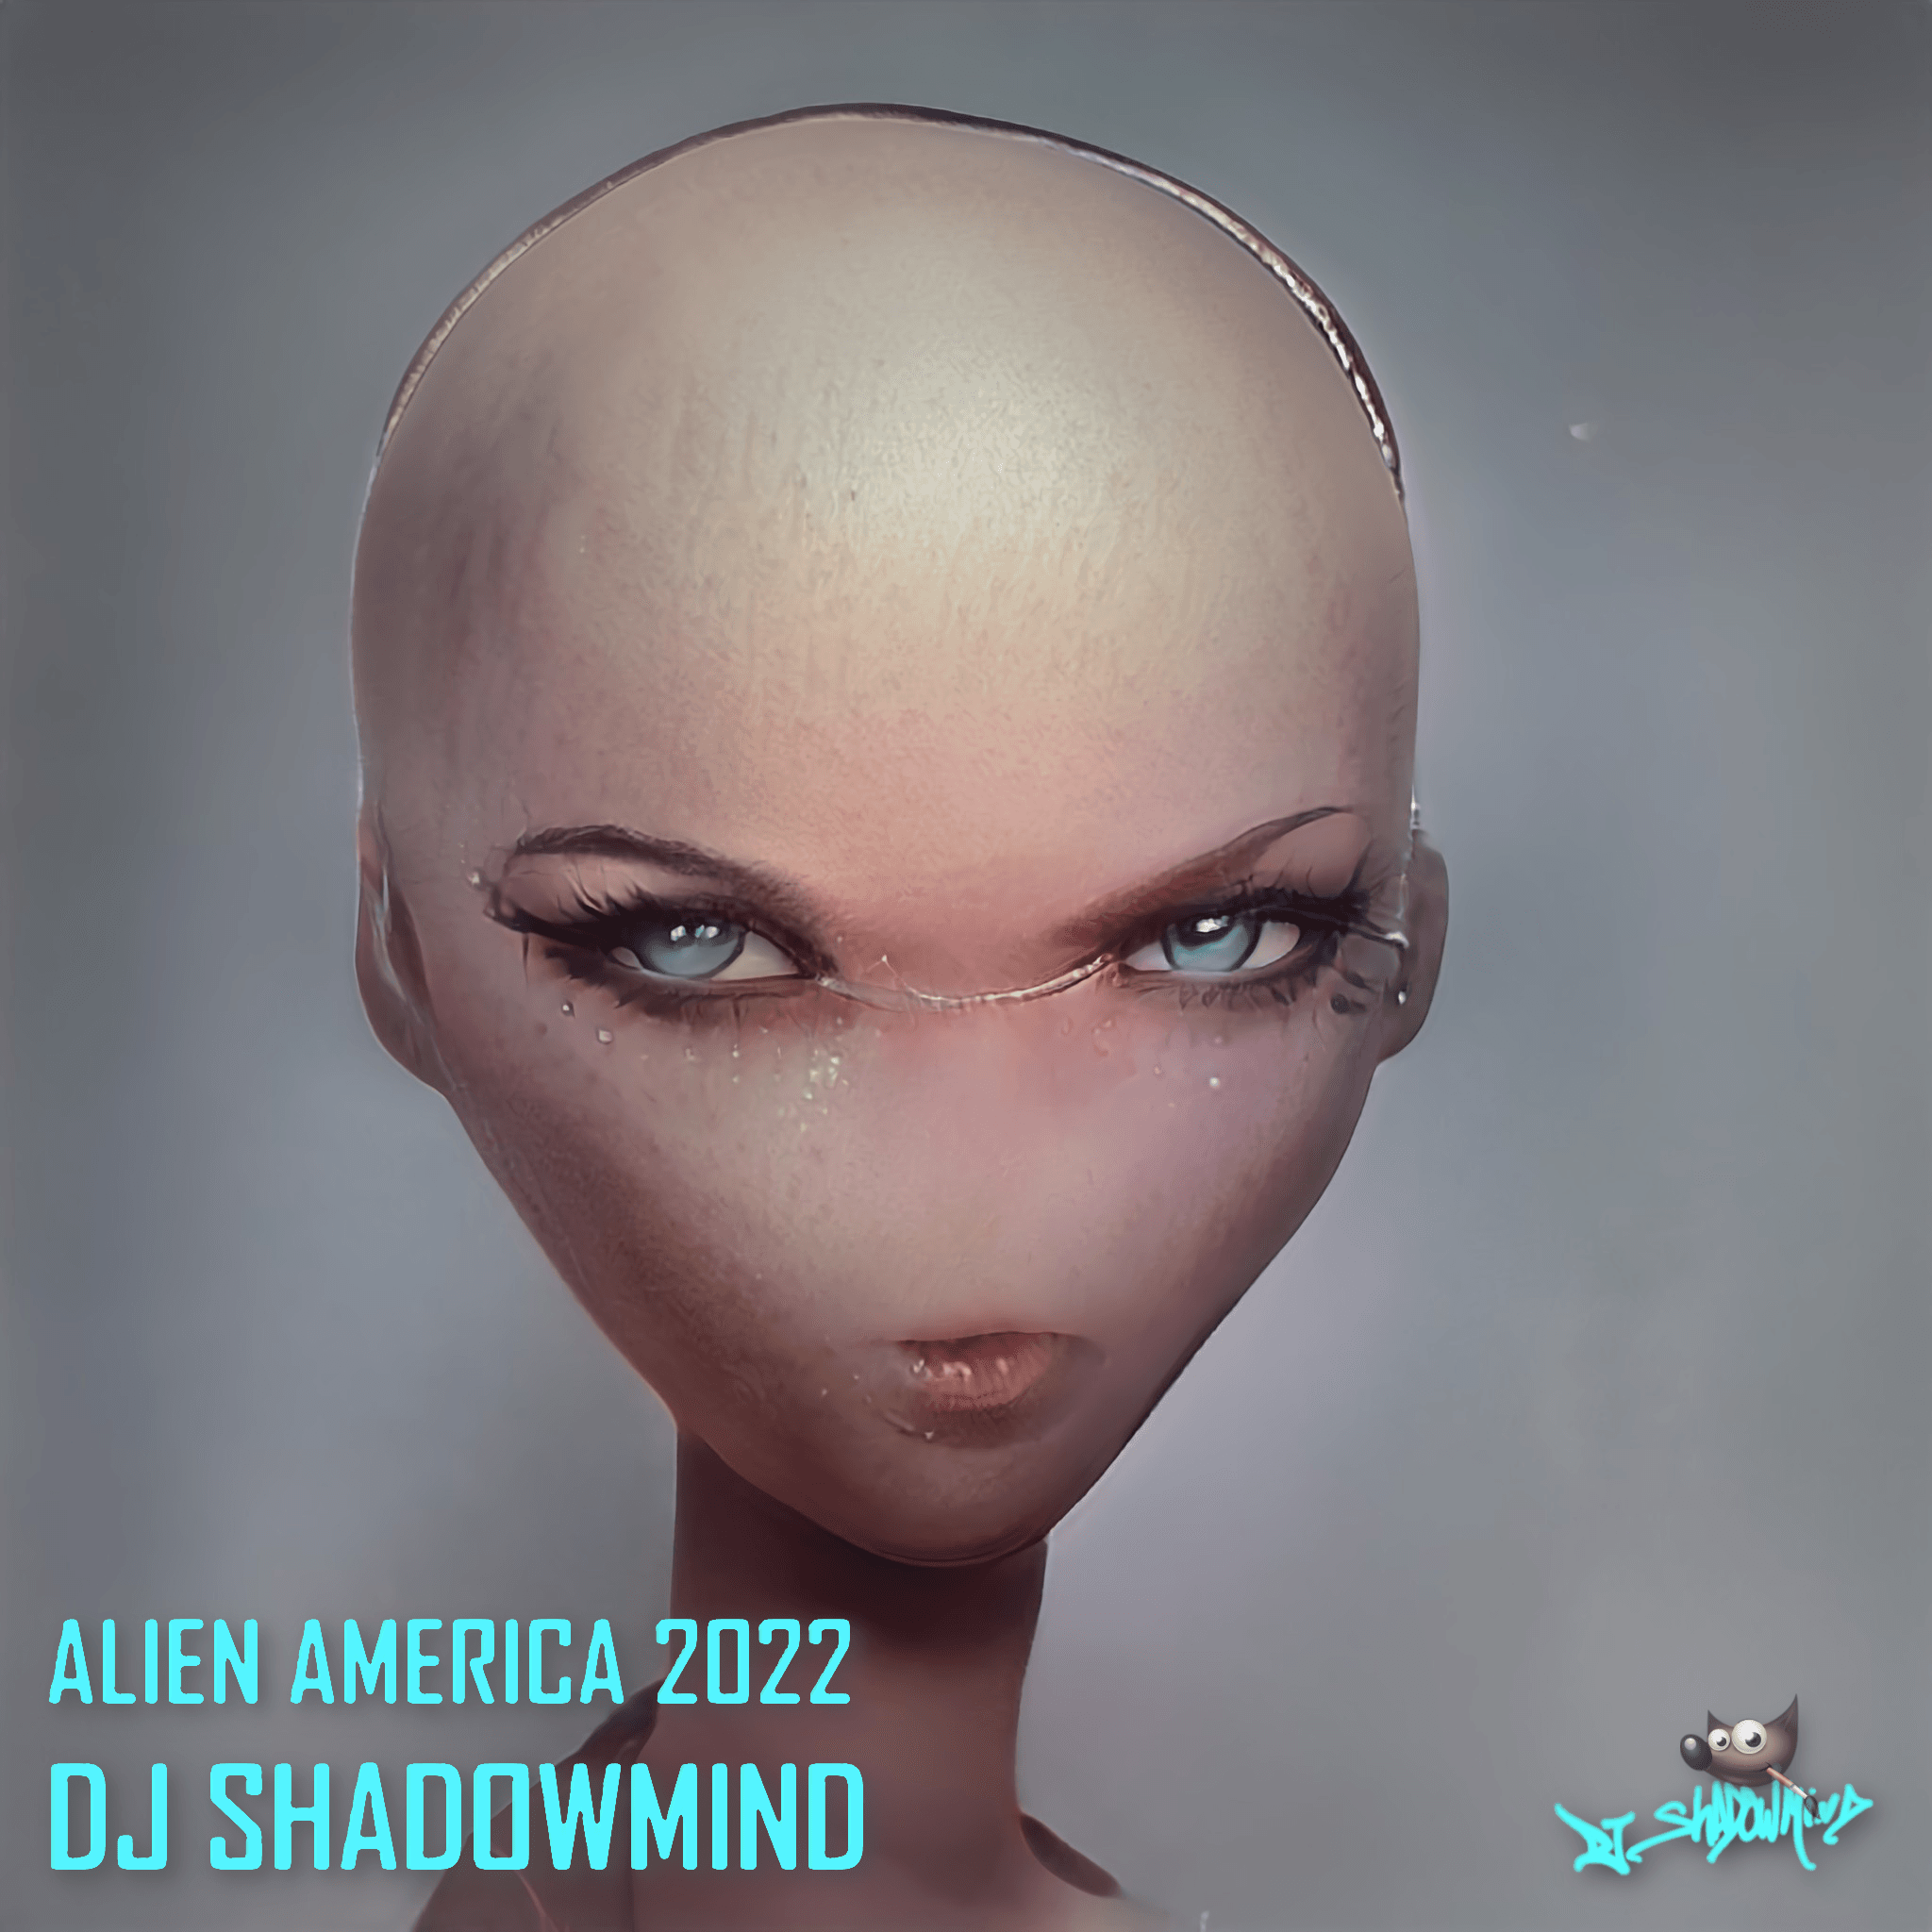 Alien America 2022 - Agent 182